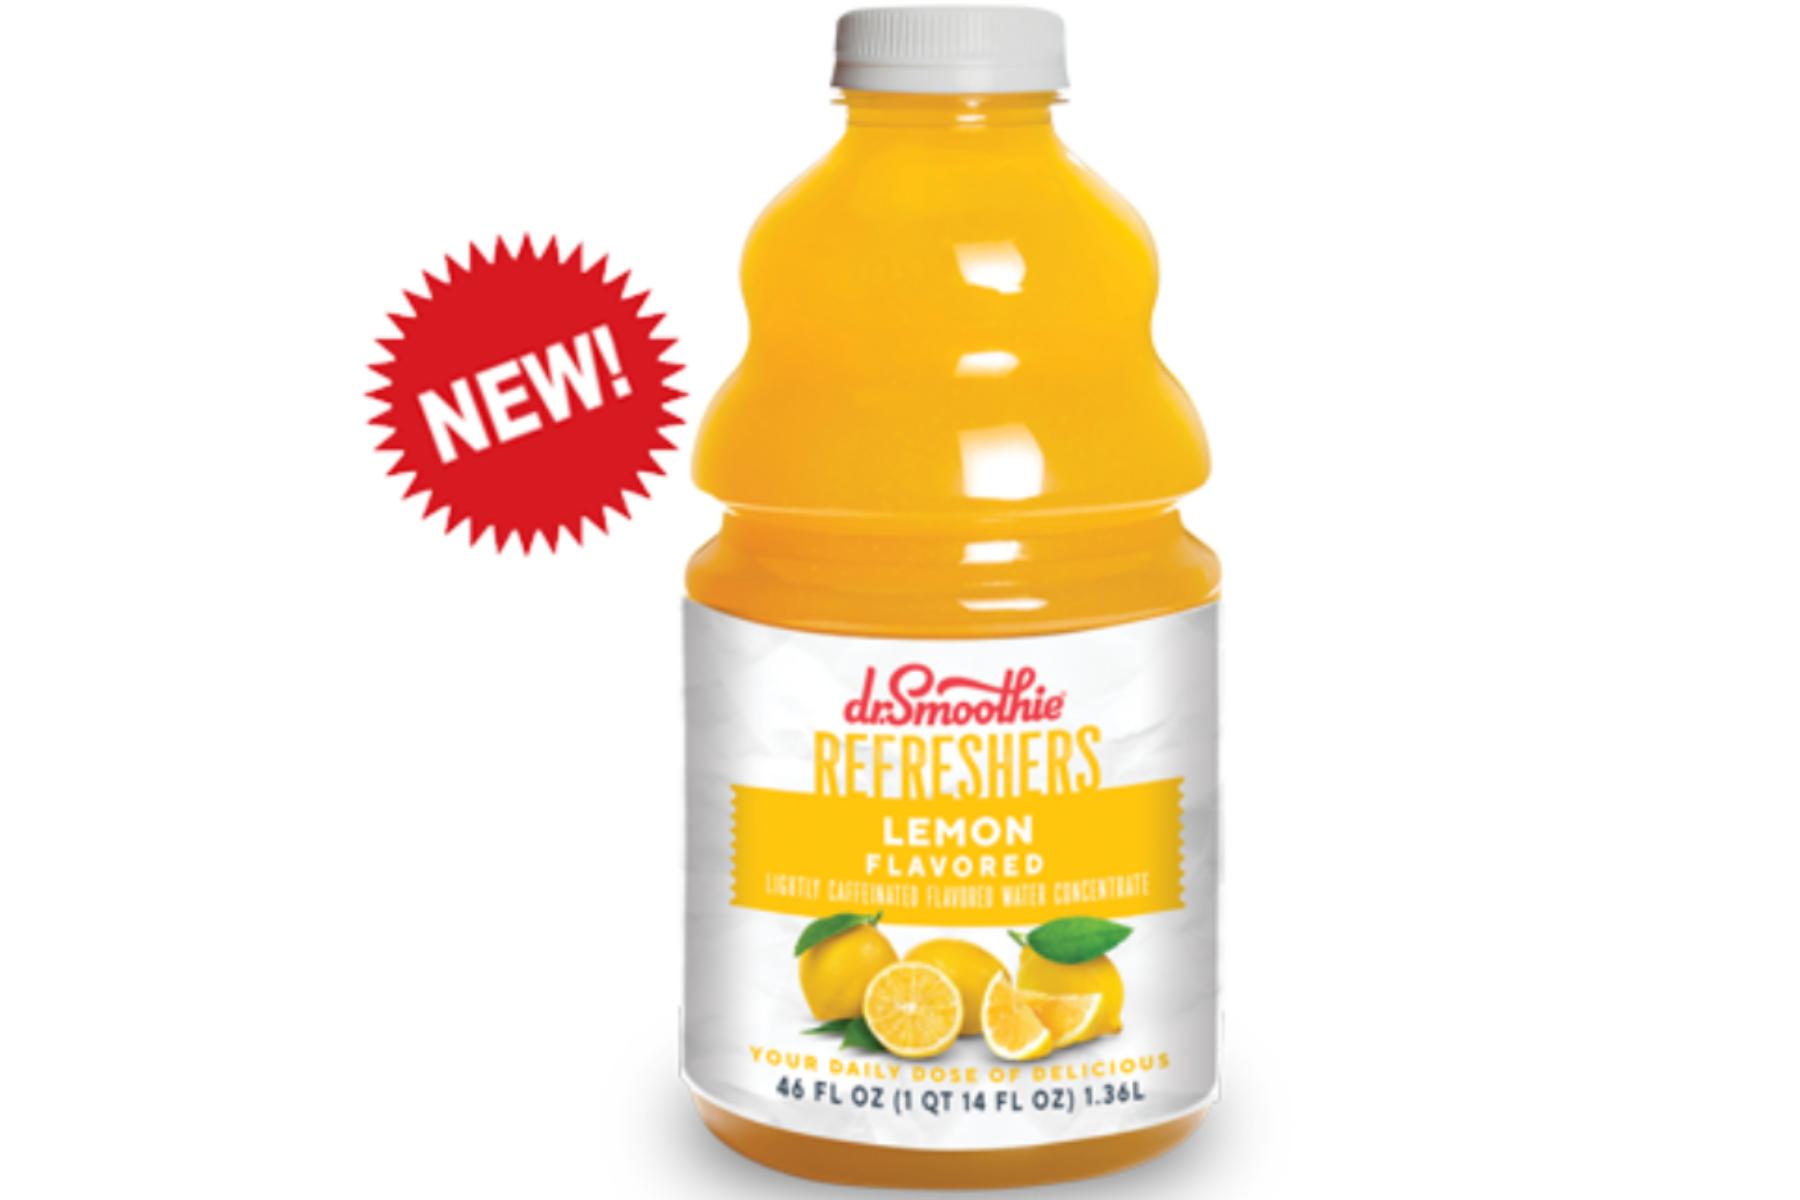 Dr. Smoothie Refreshers Lemon